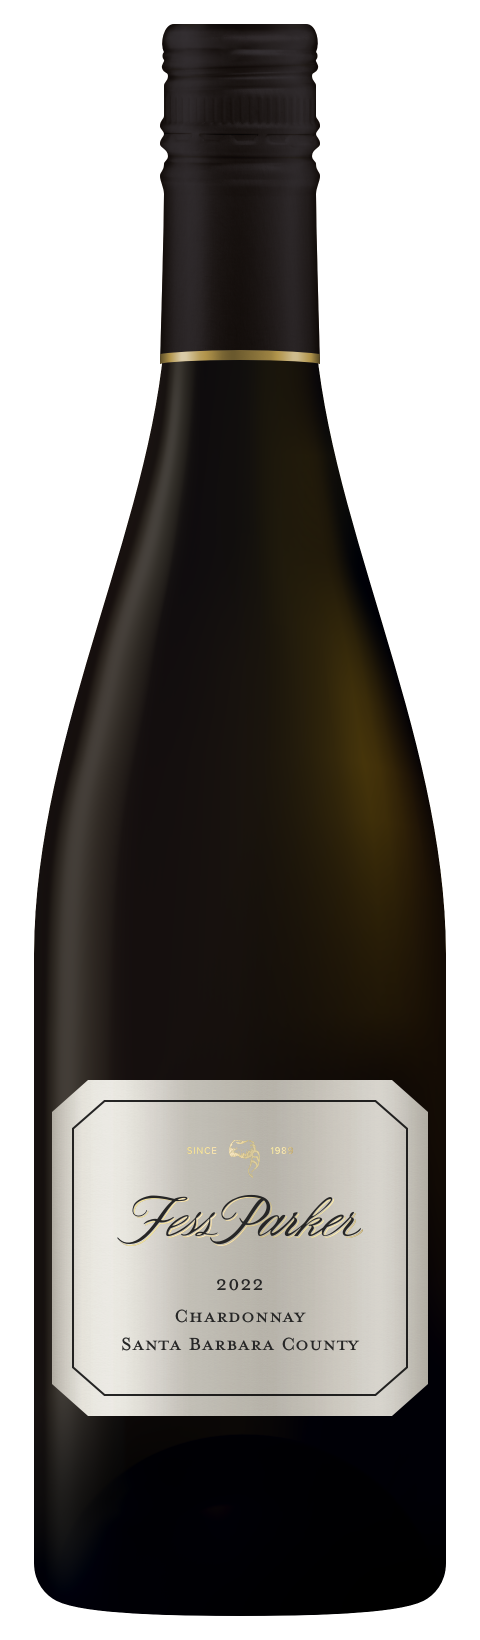 Bottle shot of Santa Barbara County Chardonnay